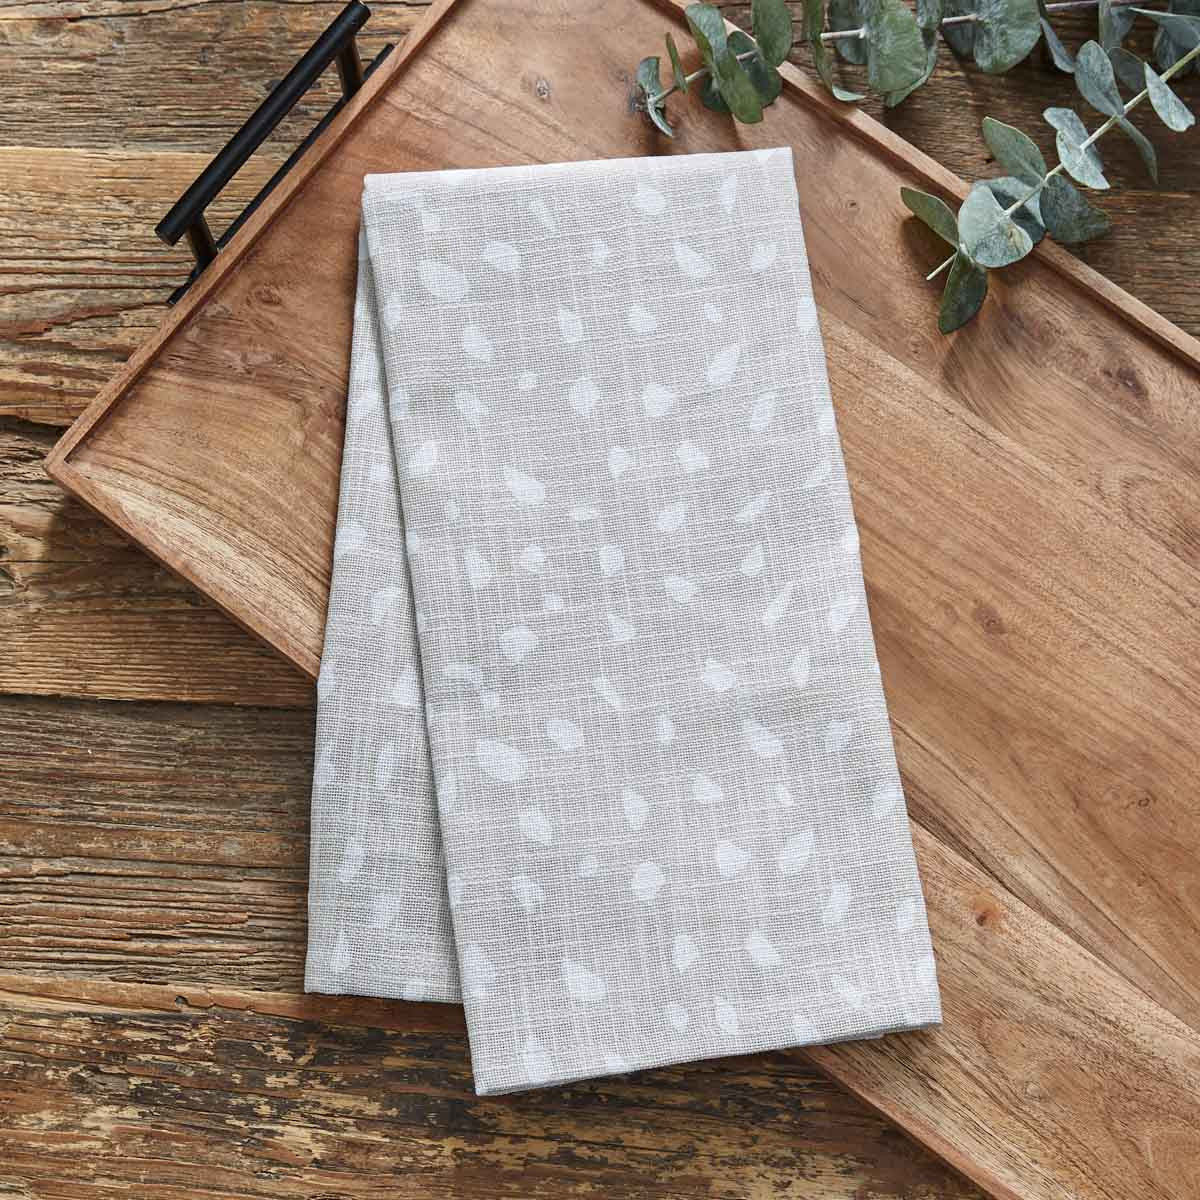 Fawn Printed Towel Set of 2  Park Designs